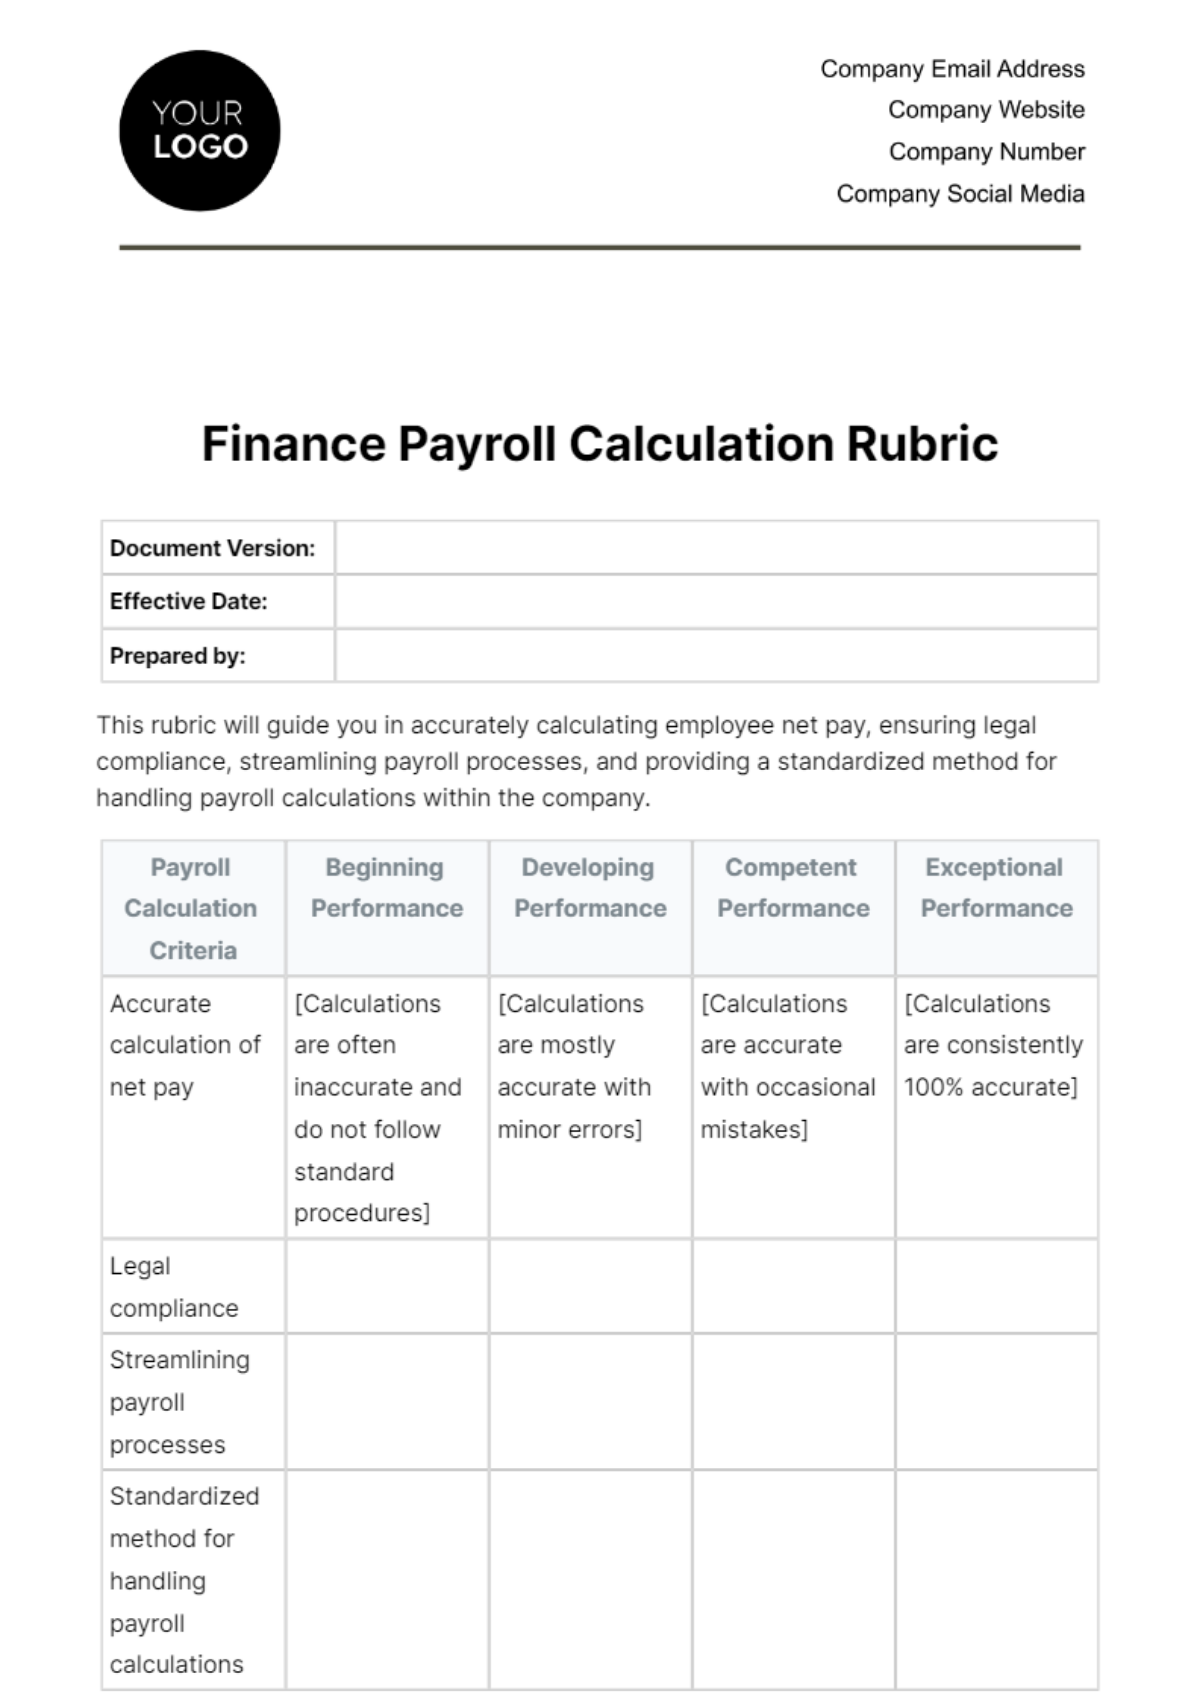 Finance Payroll Calculation Rubric Template